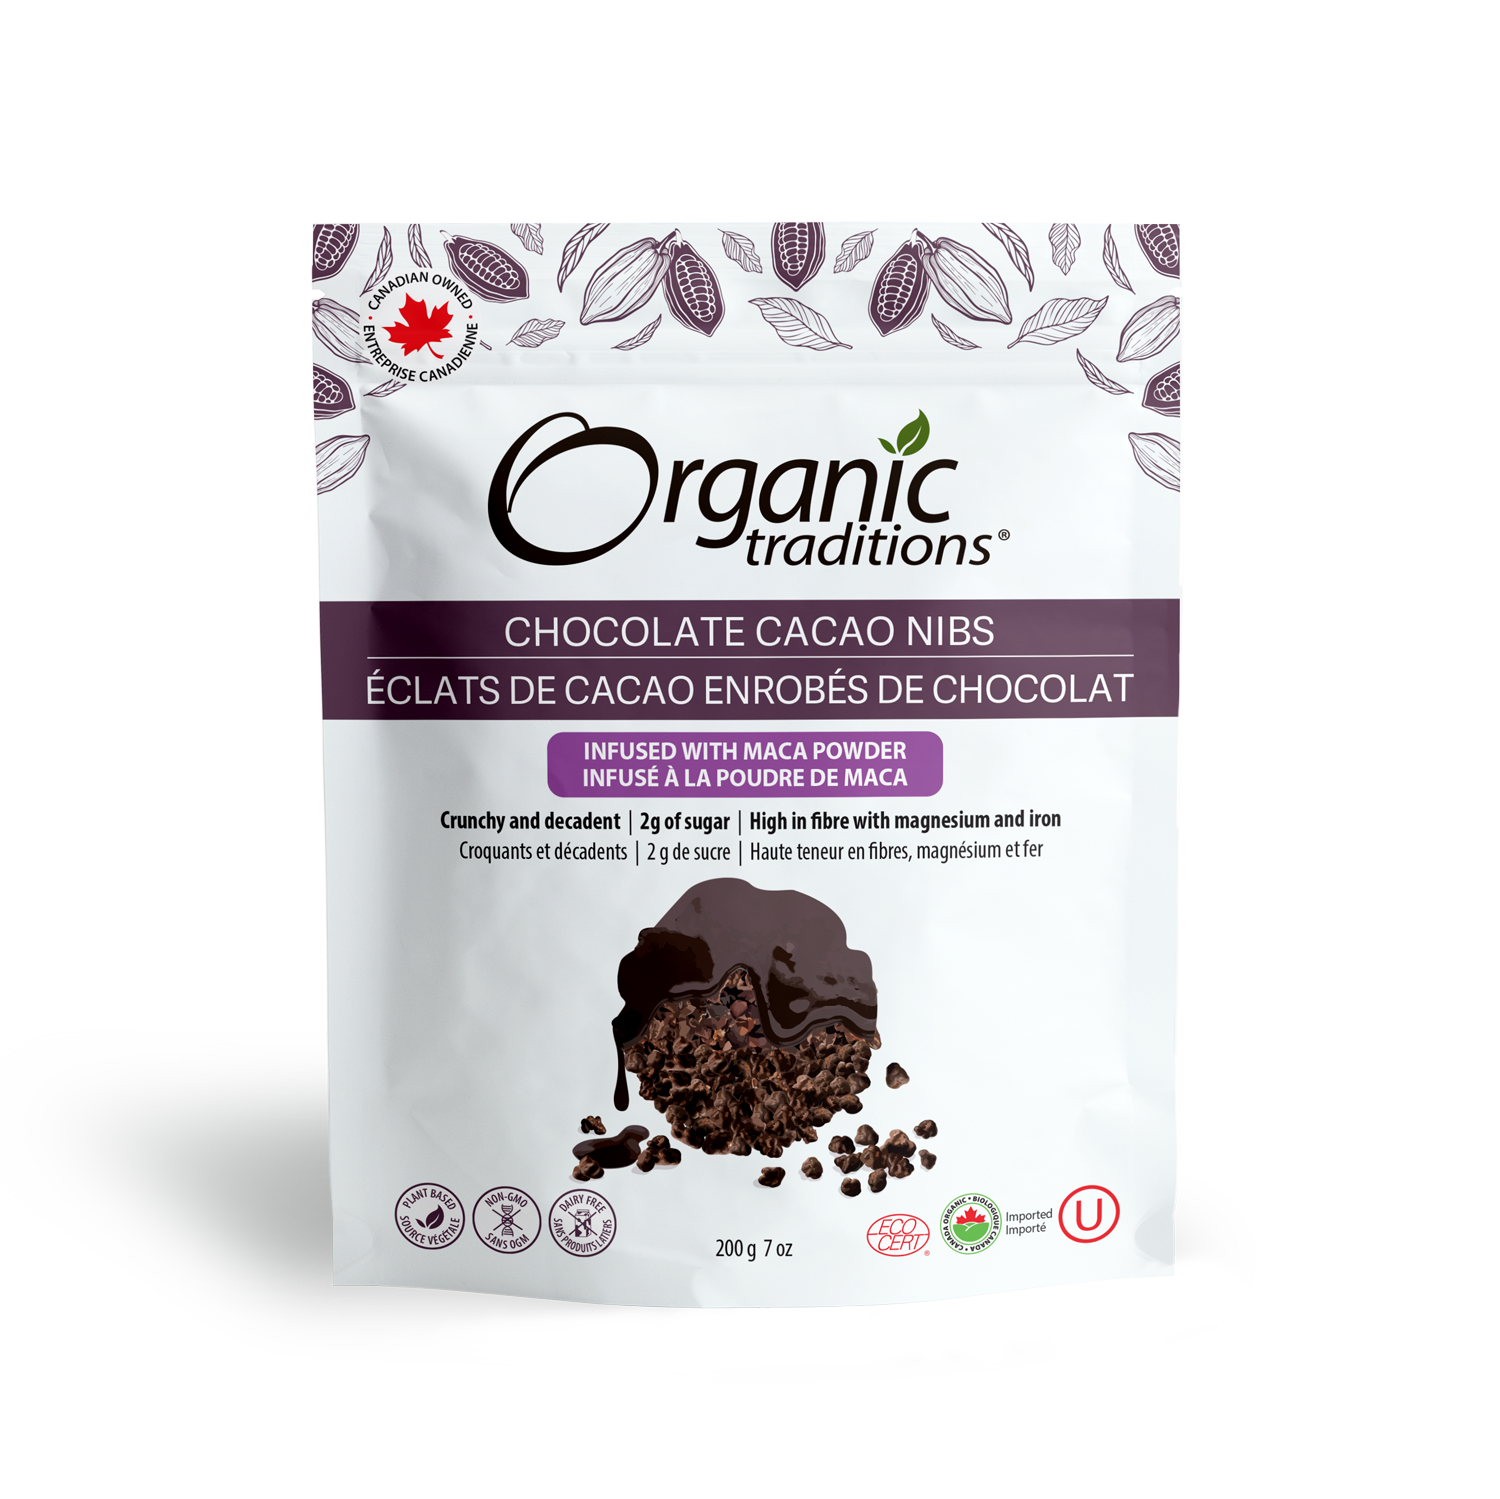 Organic Chocolate Cacao Nibs with Maca